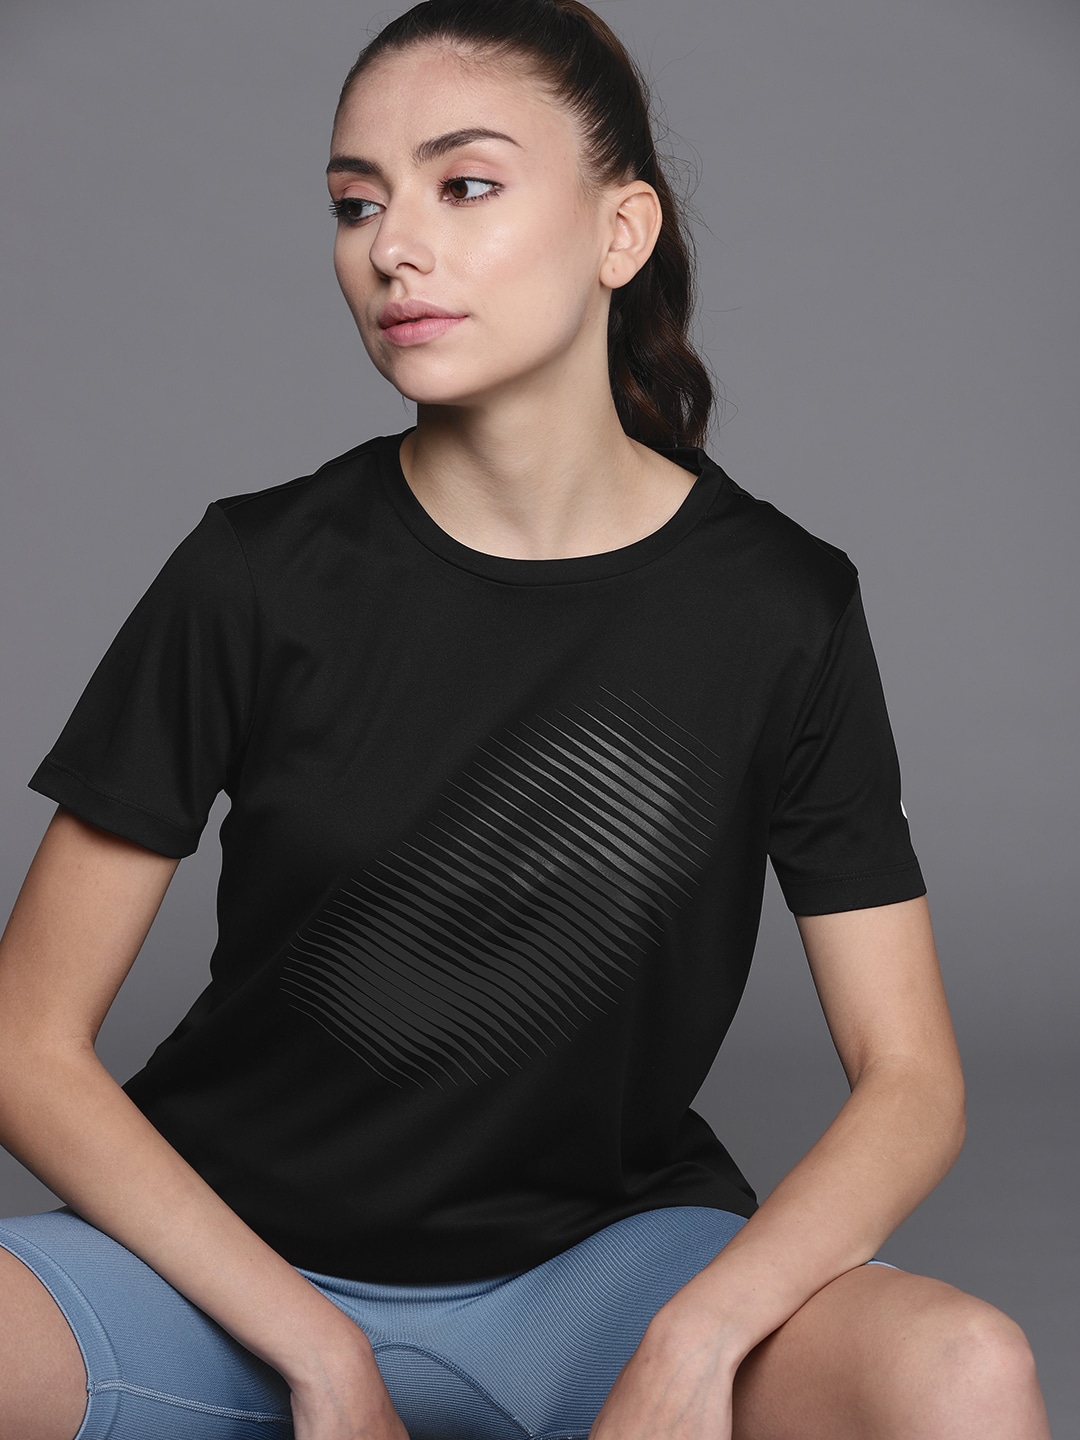 ASICS Women Black Striped T-shirt Price in India